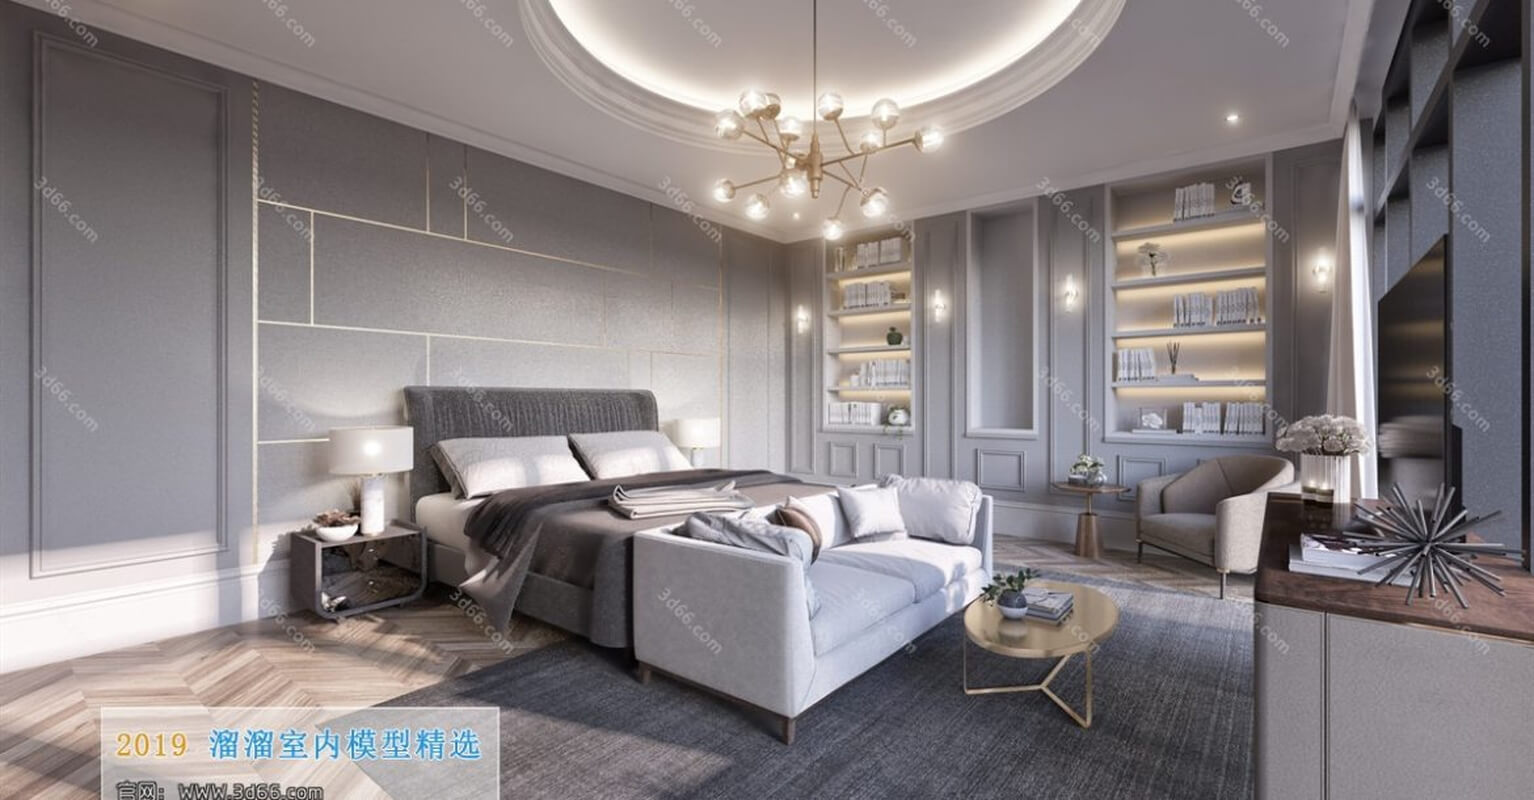 3D66 Bedroom Interior 2019 Style (02)